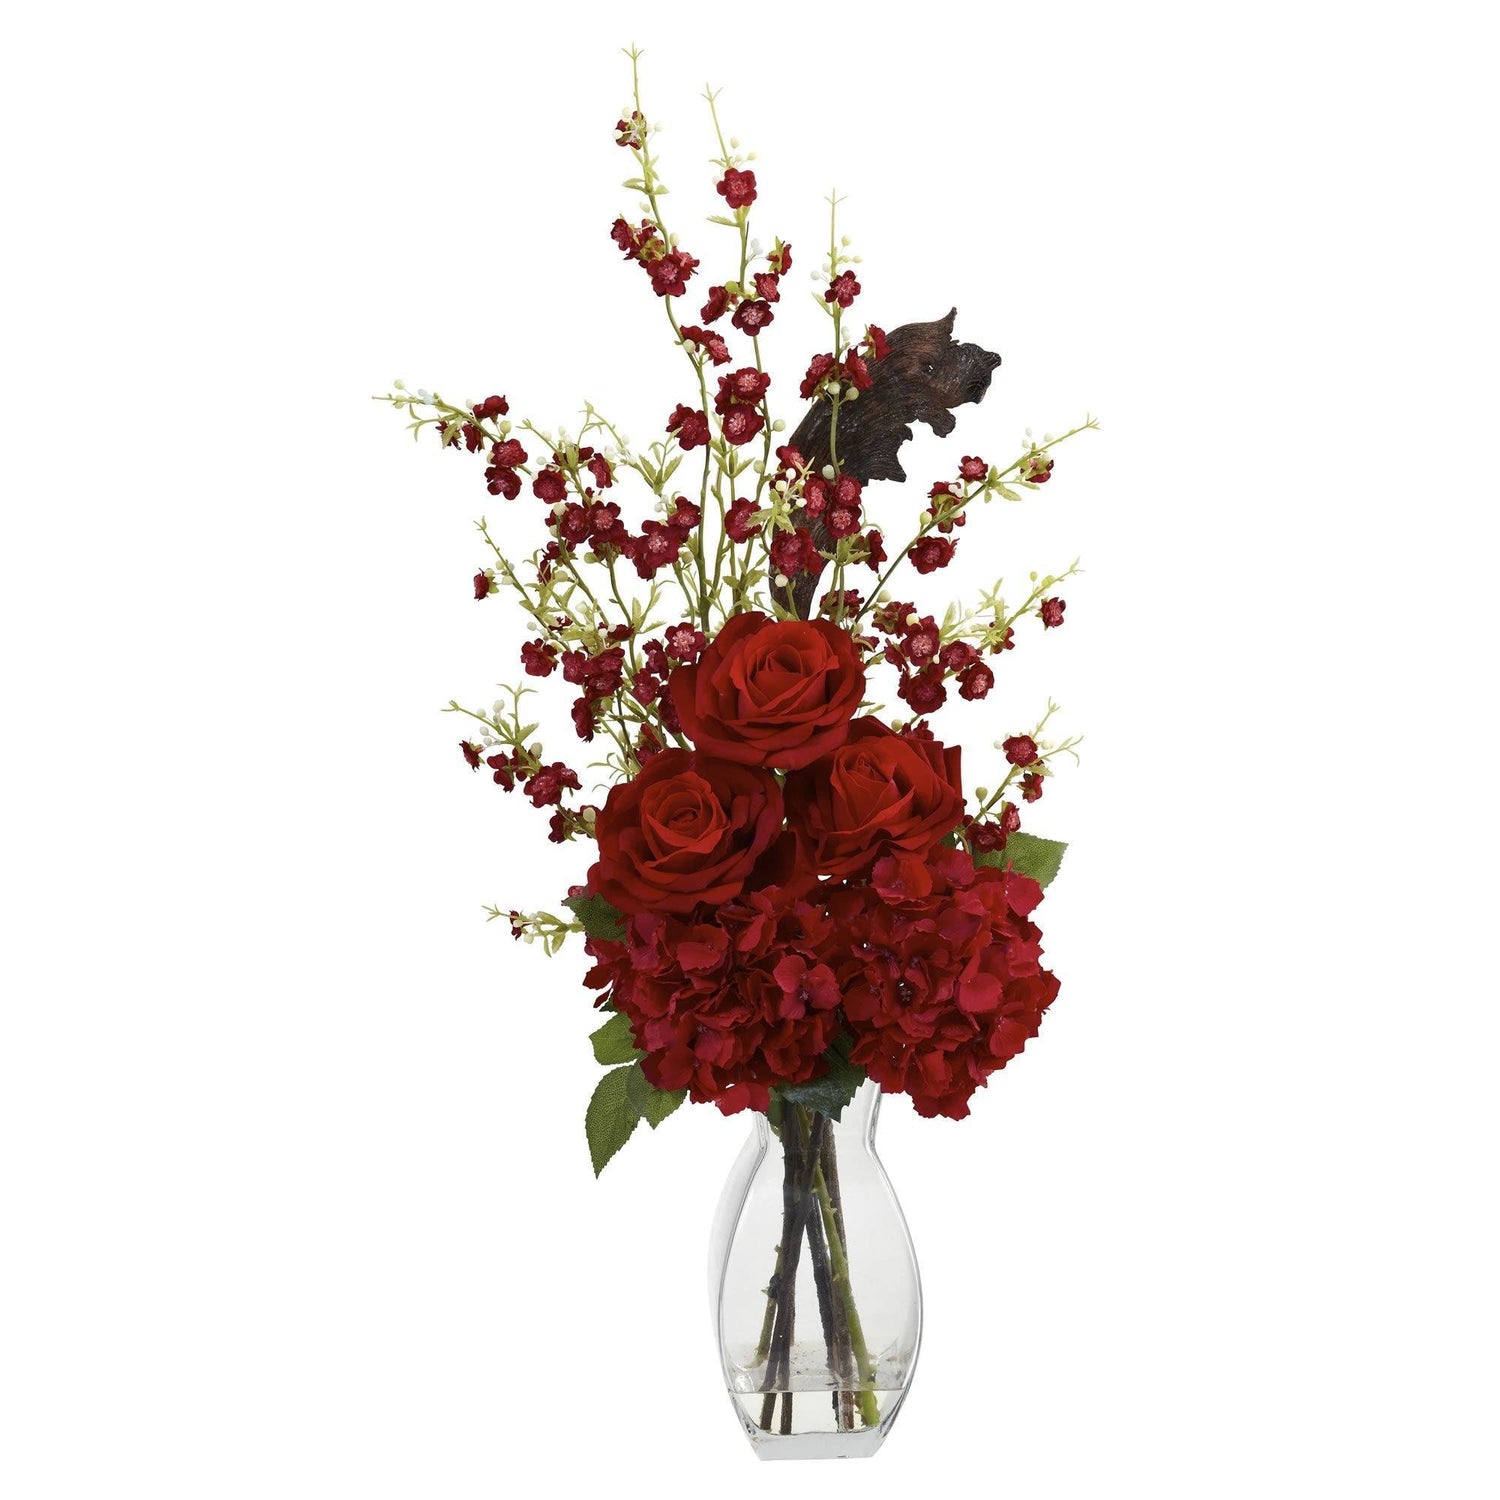 Hydrangea, Cherry Blossom and Rose Arrangement